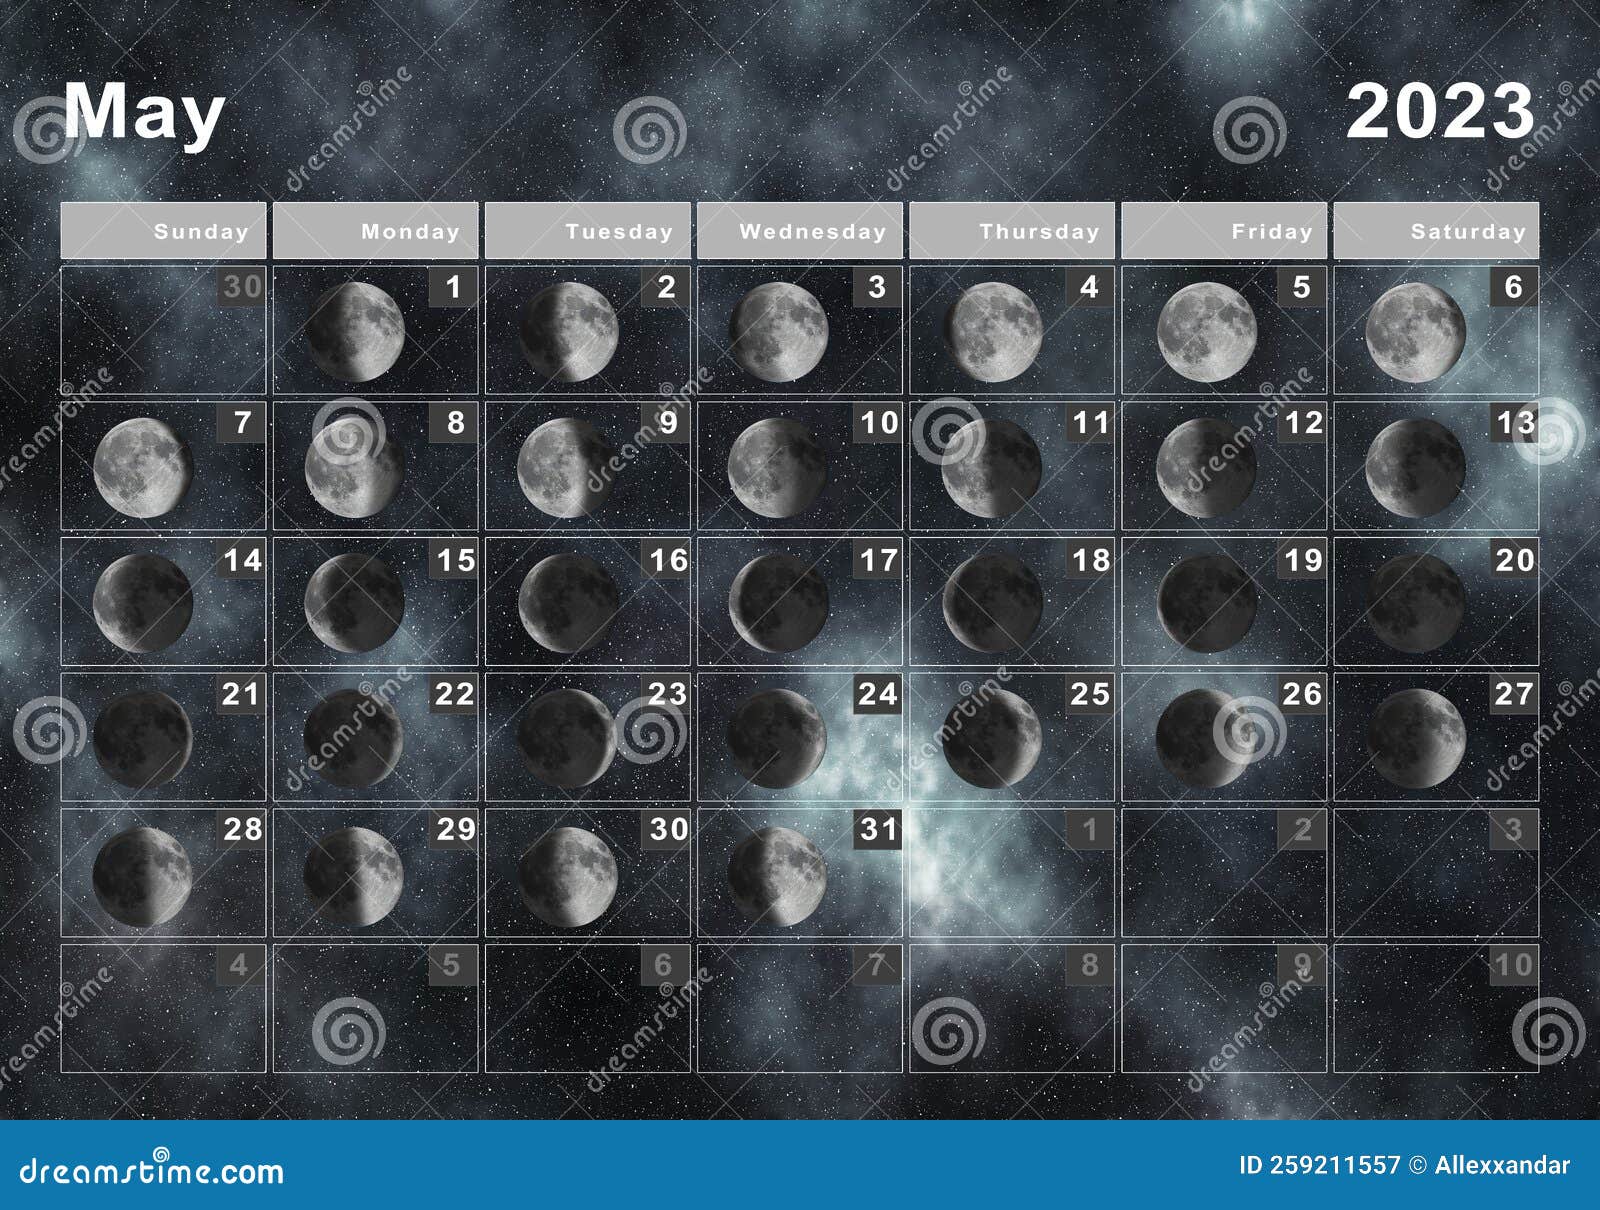 May 2023 Lunar Calendar, Moon Cycles Stock Image - Image of galaxy ...